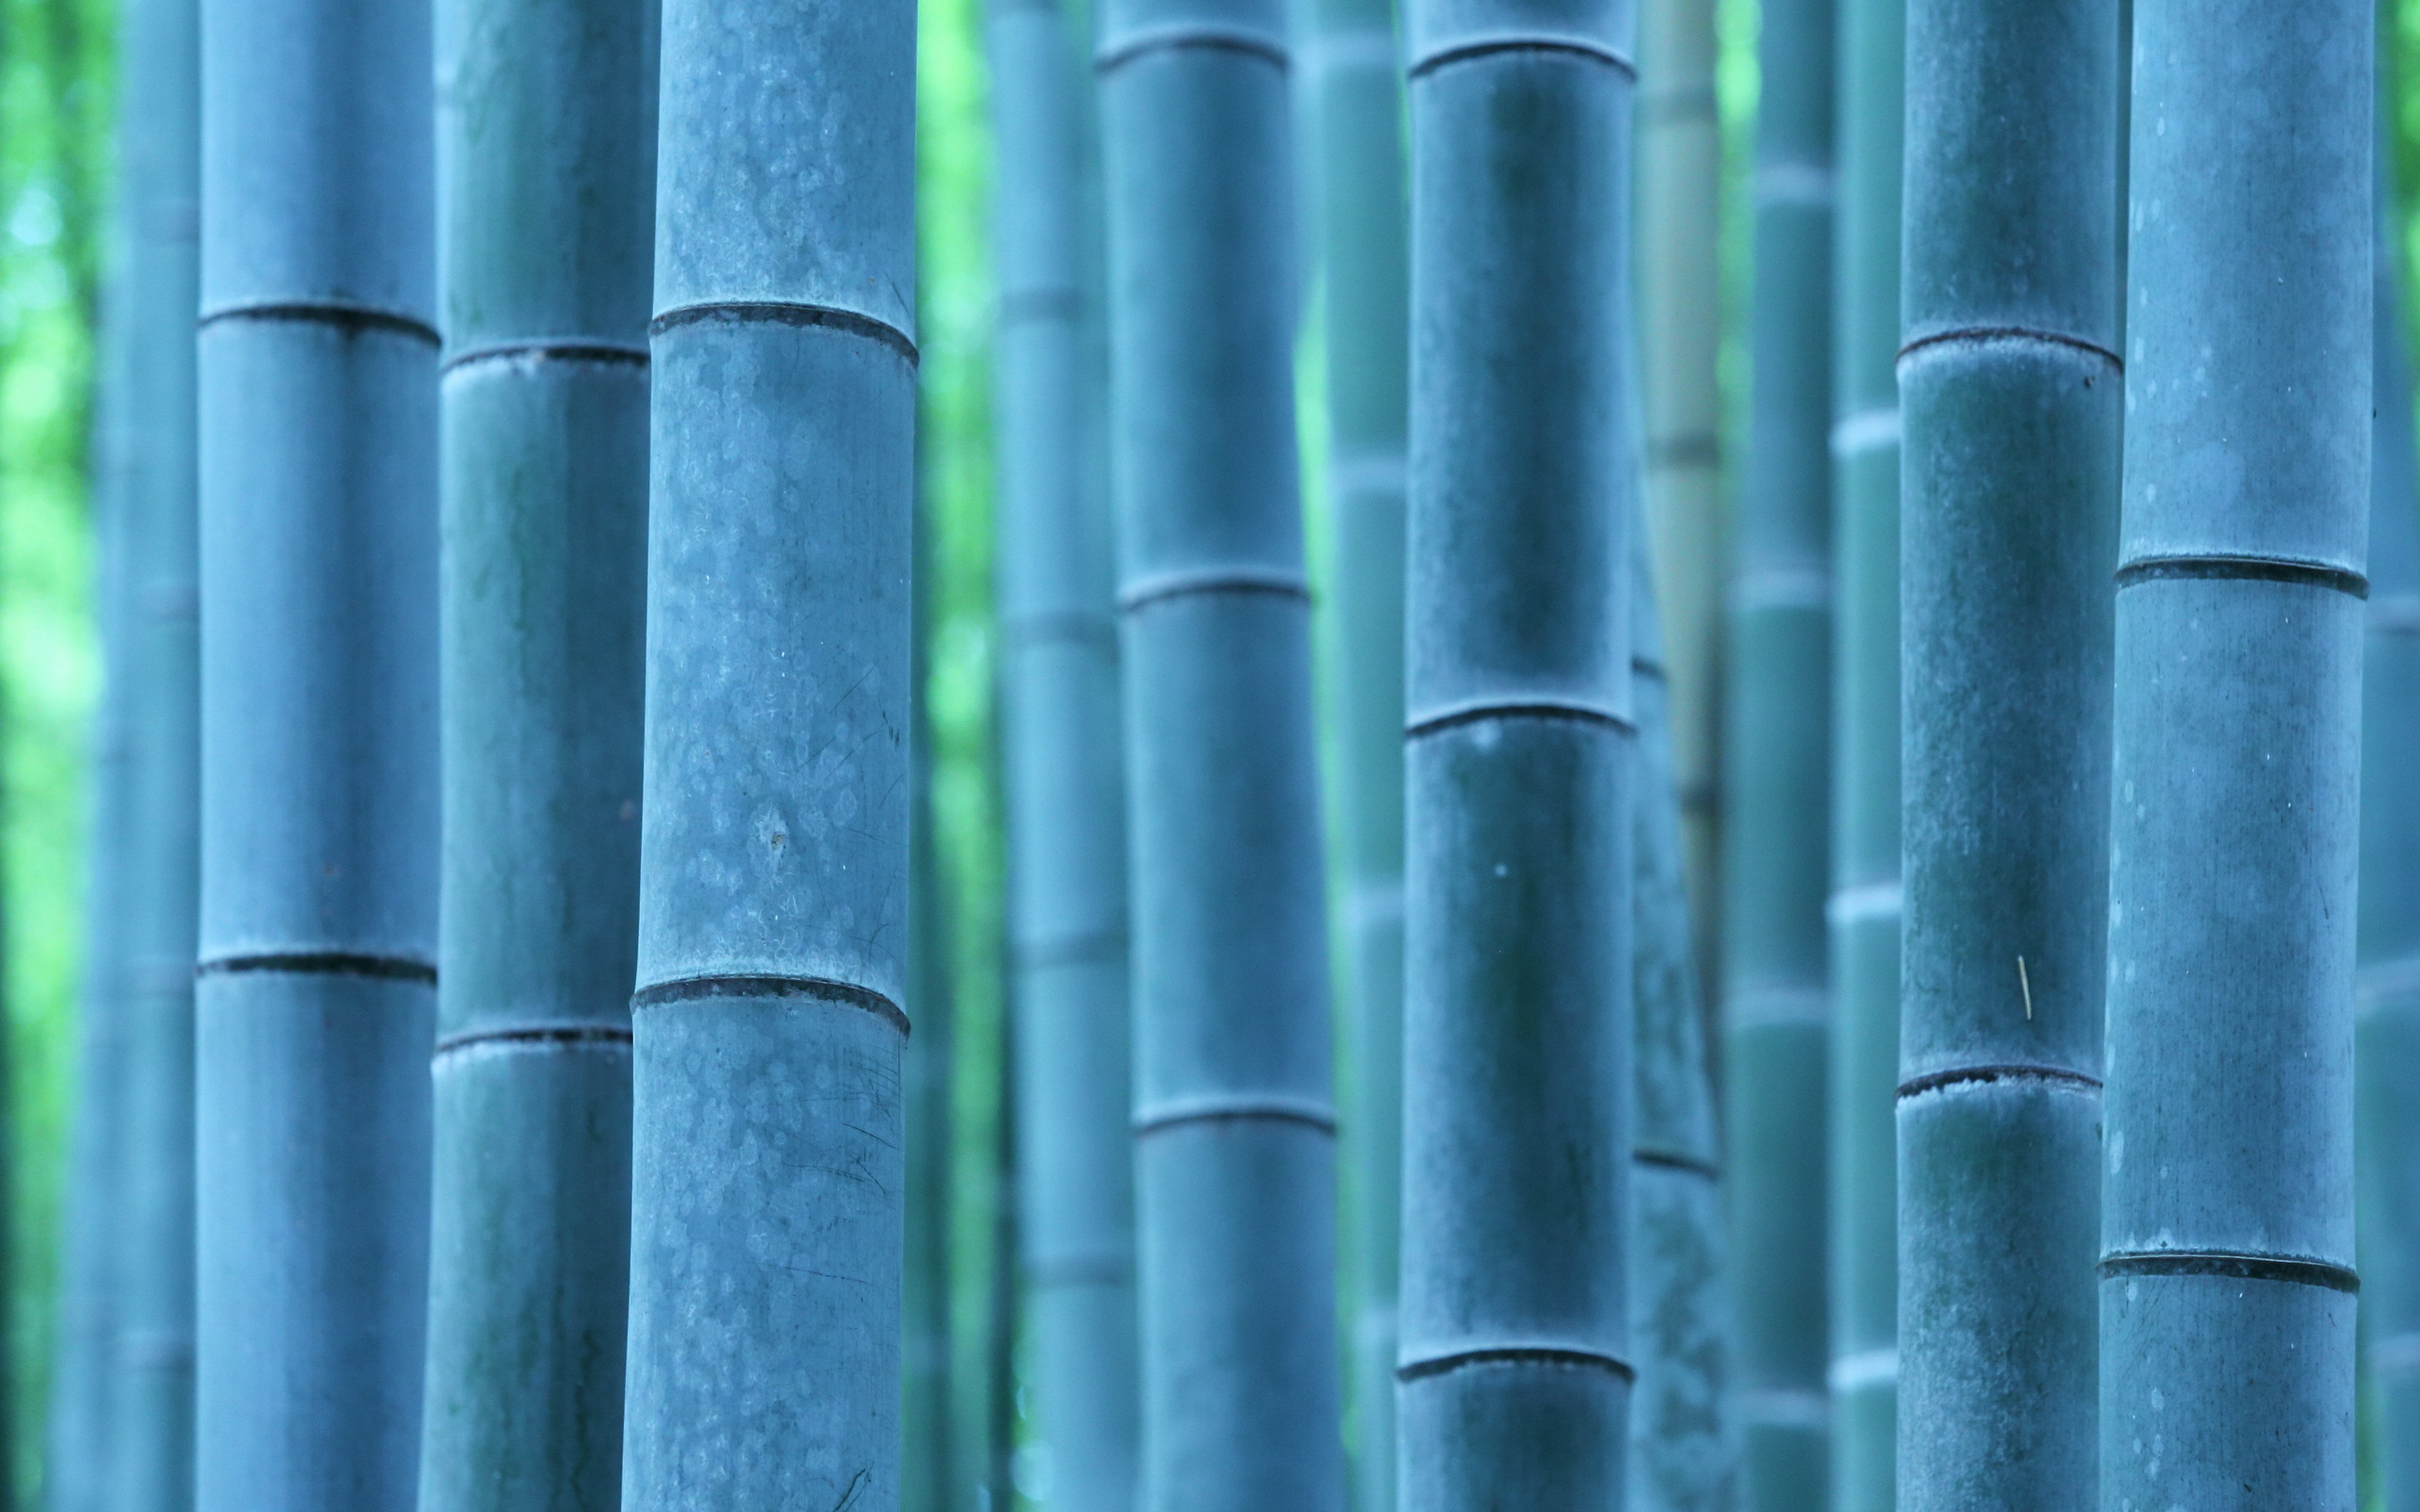 596881 descargar imagen tierra/naturaleza, bambú: fondos de pantalla y protectores de pantalla gratis